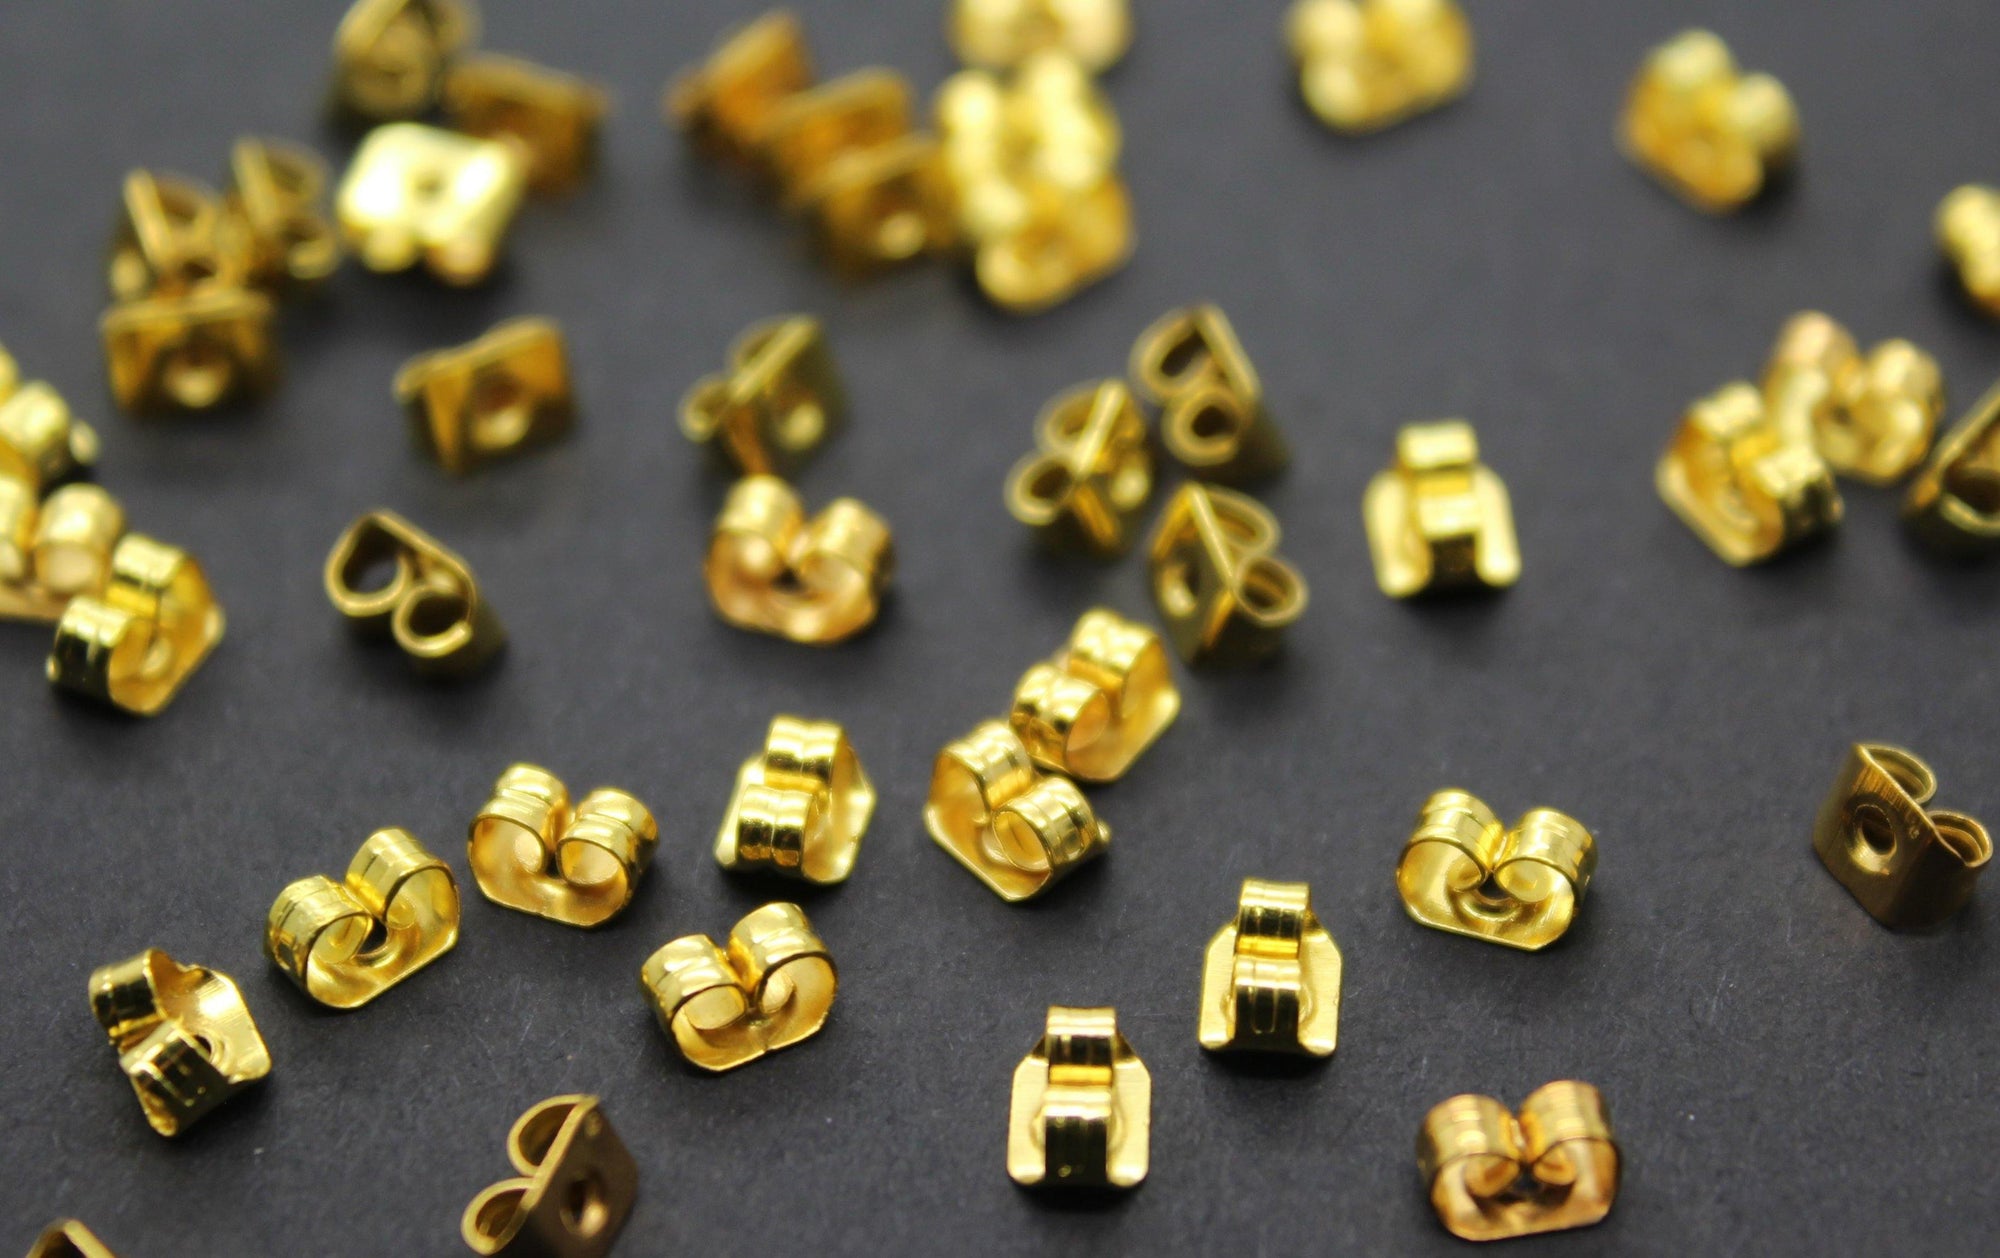 Backings, Gold, Alloy, Earnut Backing, 5mm x 3mm, sold per pkg of 50+ - Butterfly Beads